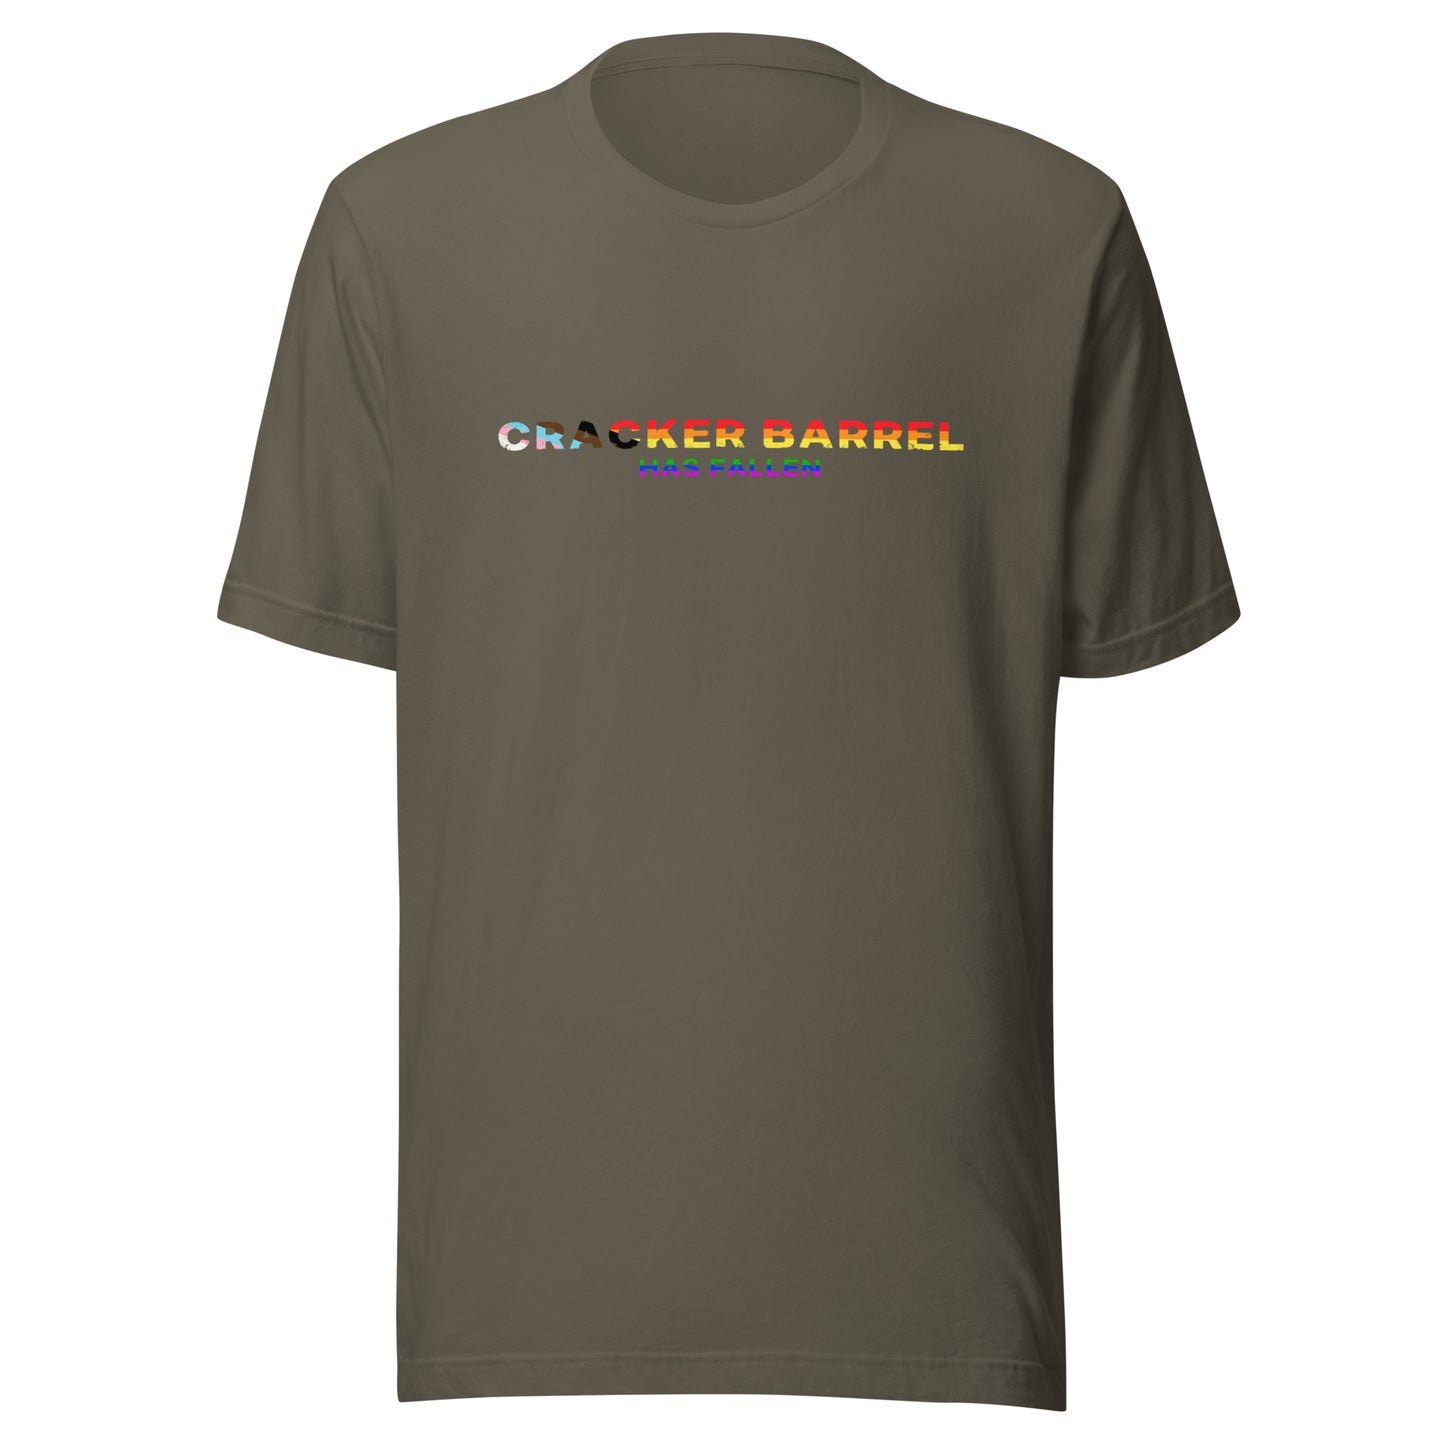 Cracker Barrel Has Fallen Pride Variant Unisex t-shirt